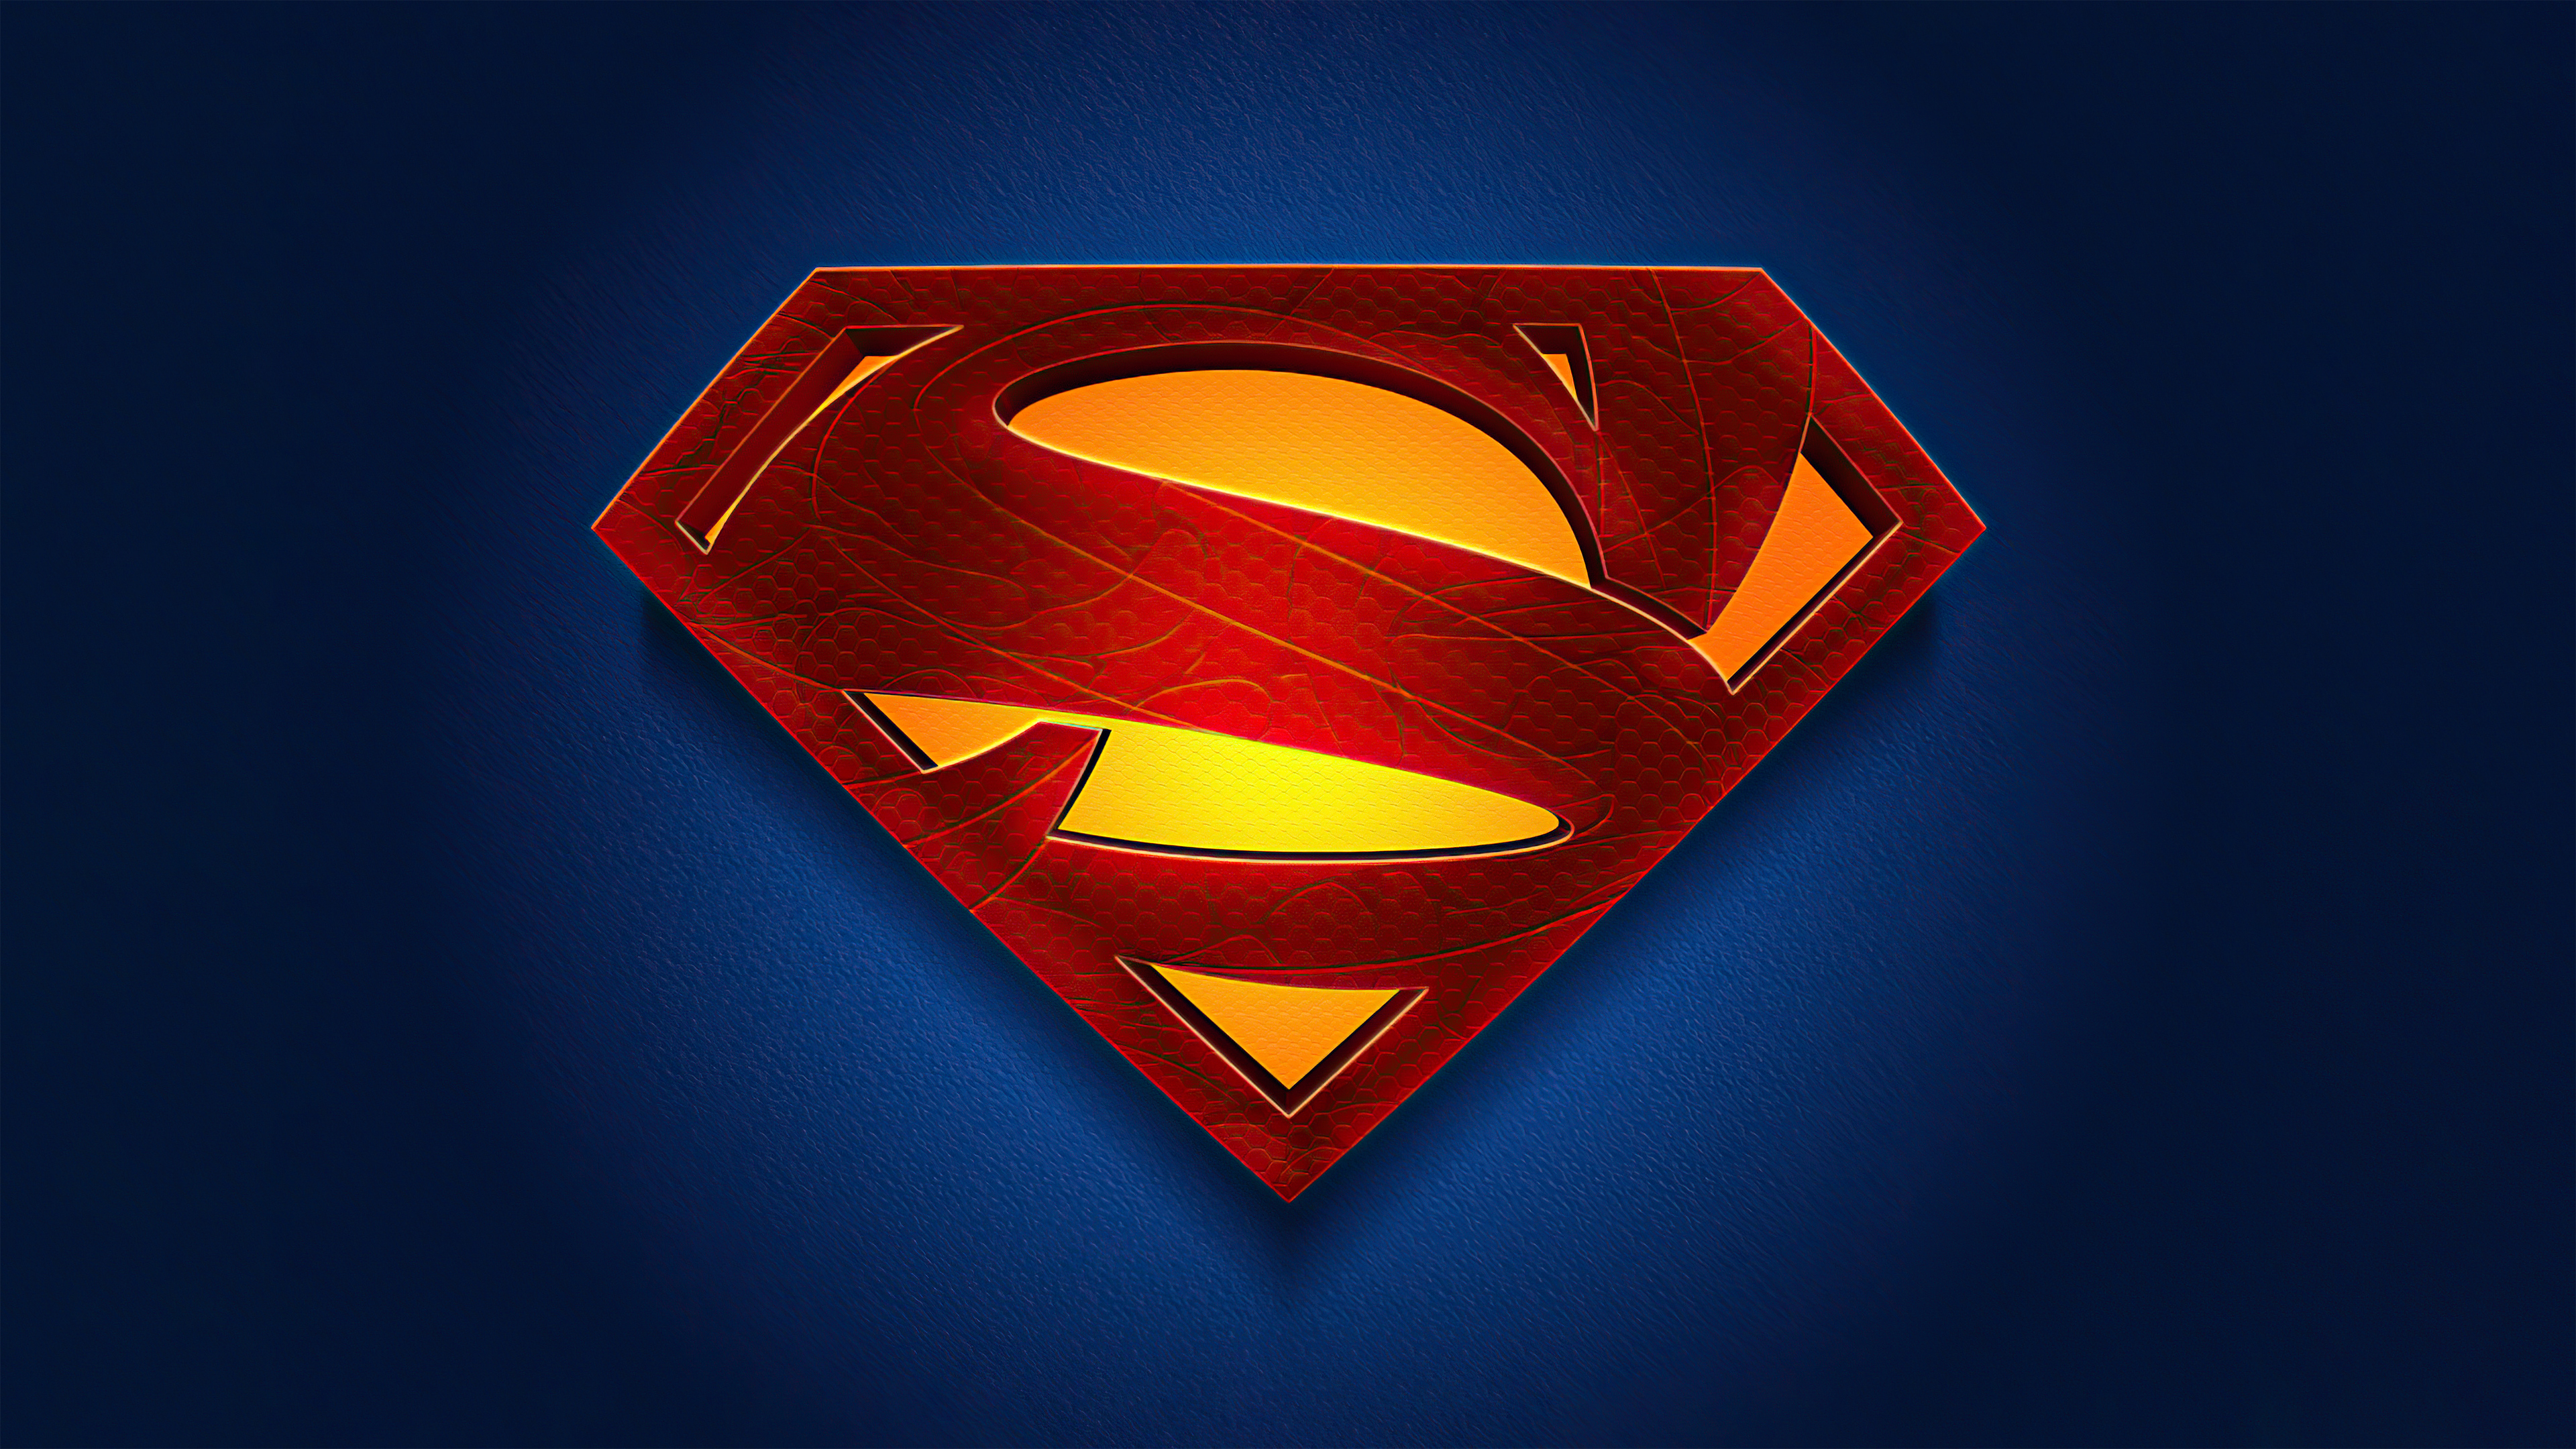 3840x2160 10+ 4K Superman Logo Wallpapers | Background Images